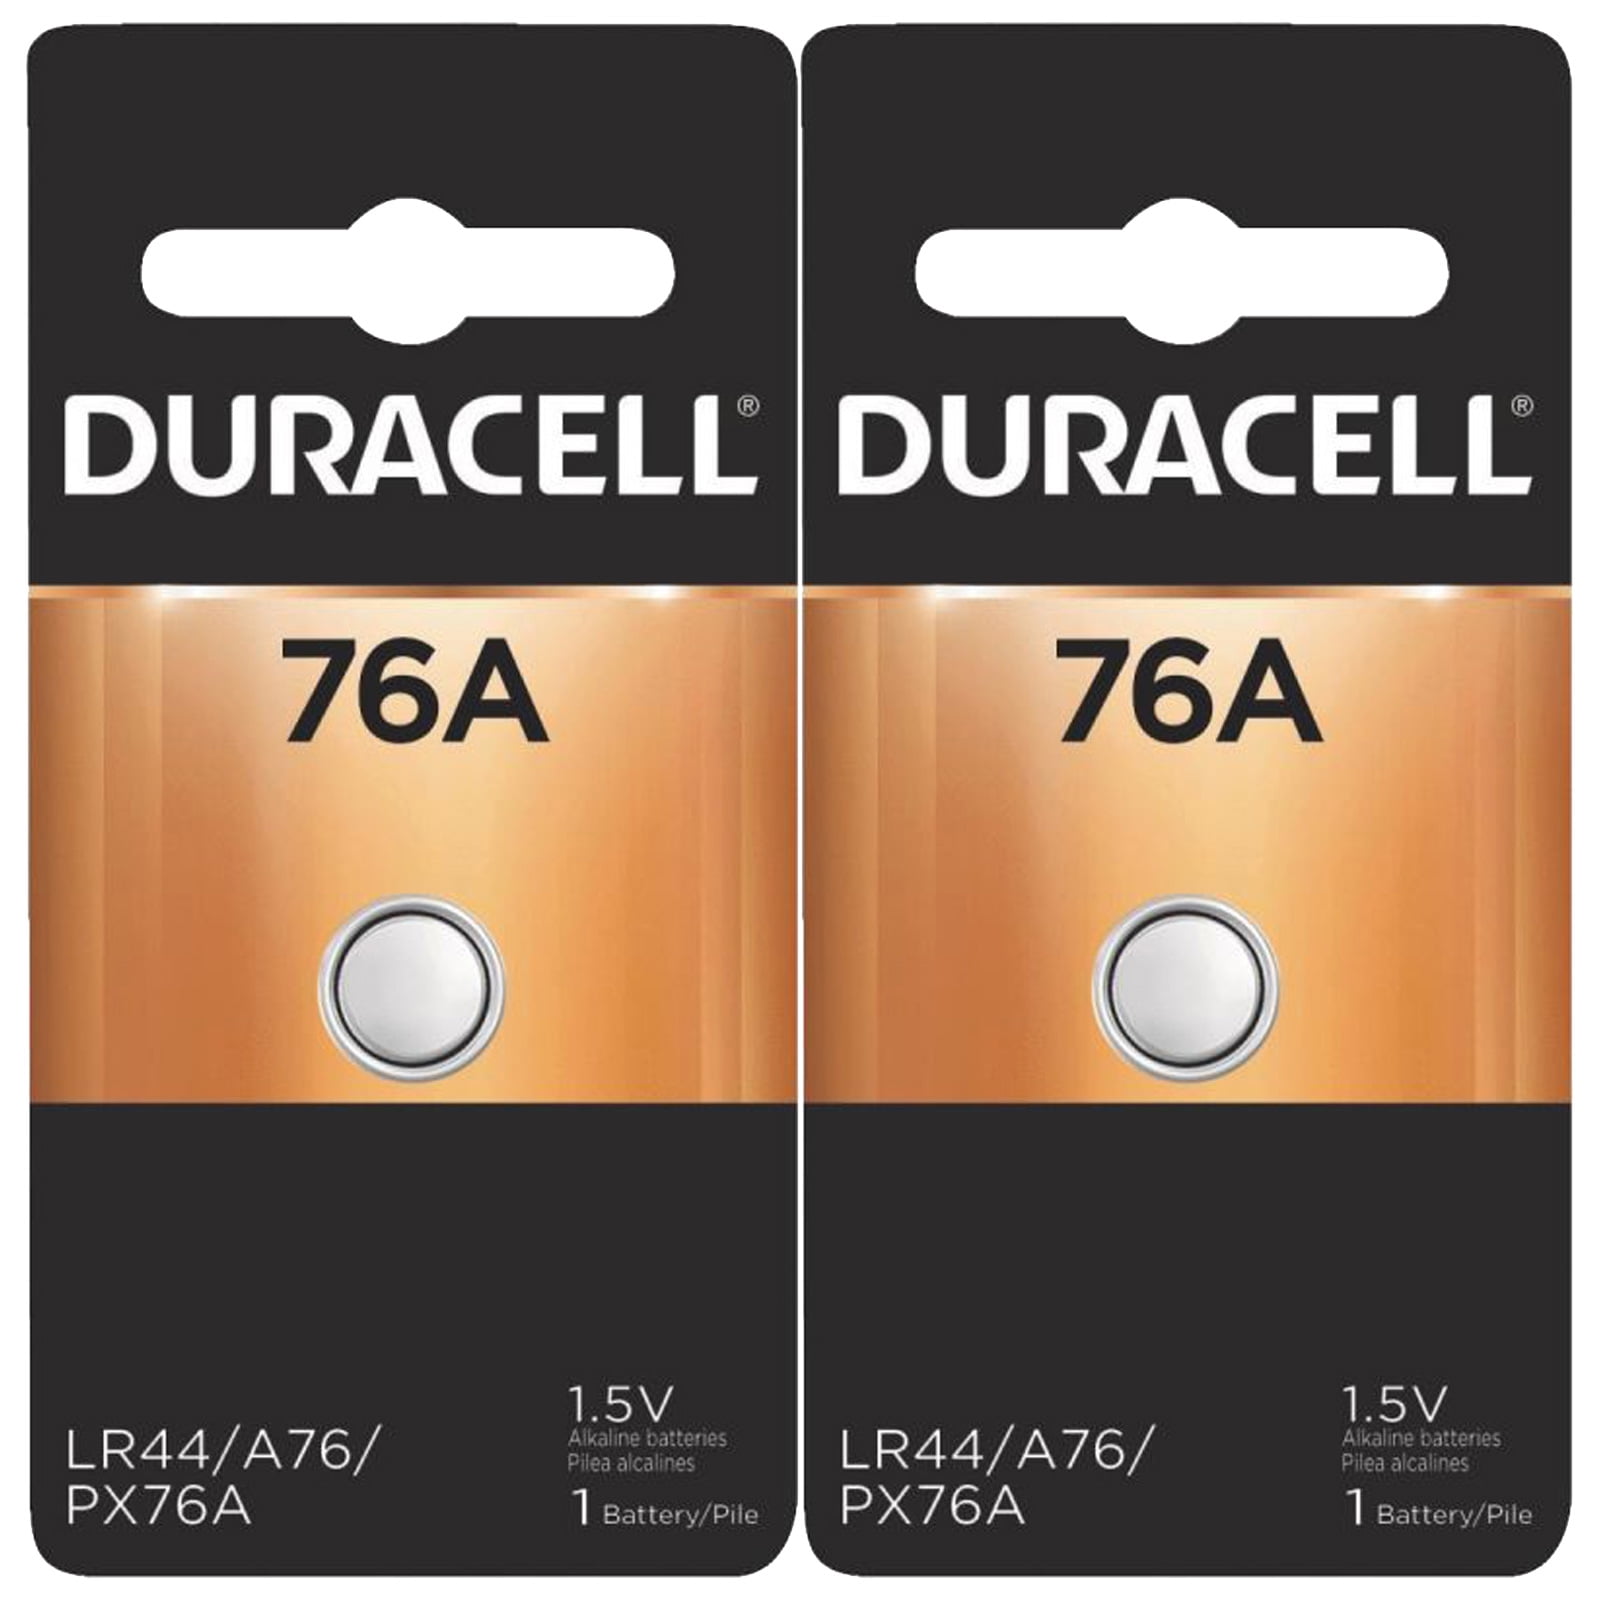 kommando nedenunder peeling 2x Duracell 76A 1.5V Alkaline Battery Replacement LR44,CR44,SR44,AG13,A76,PX76  - Walmart.com